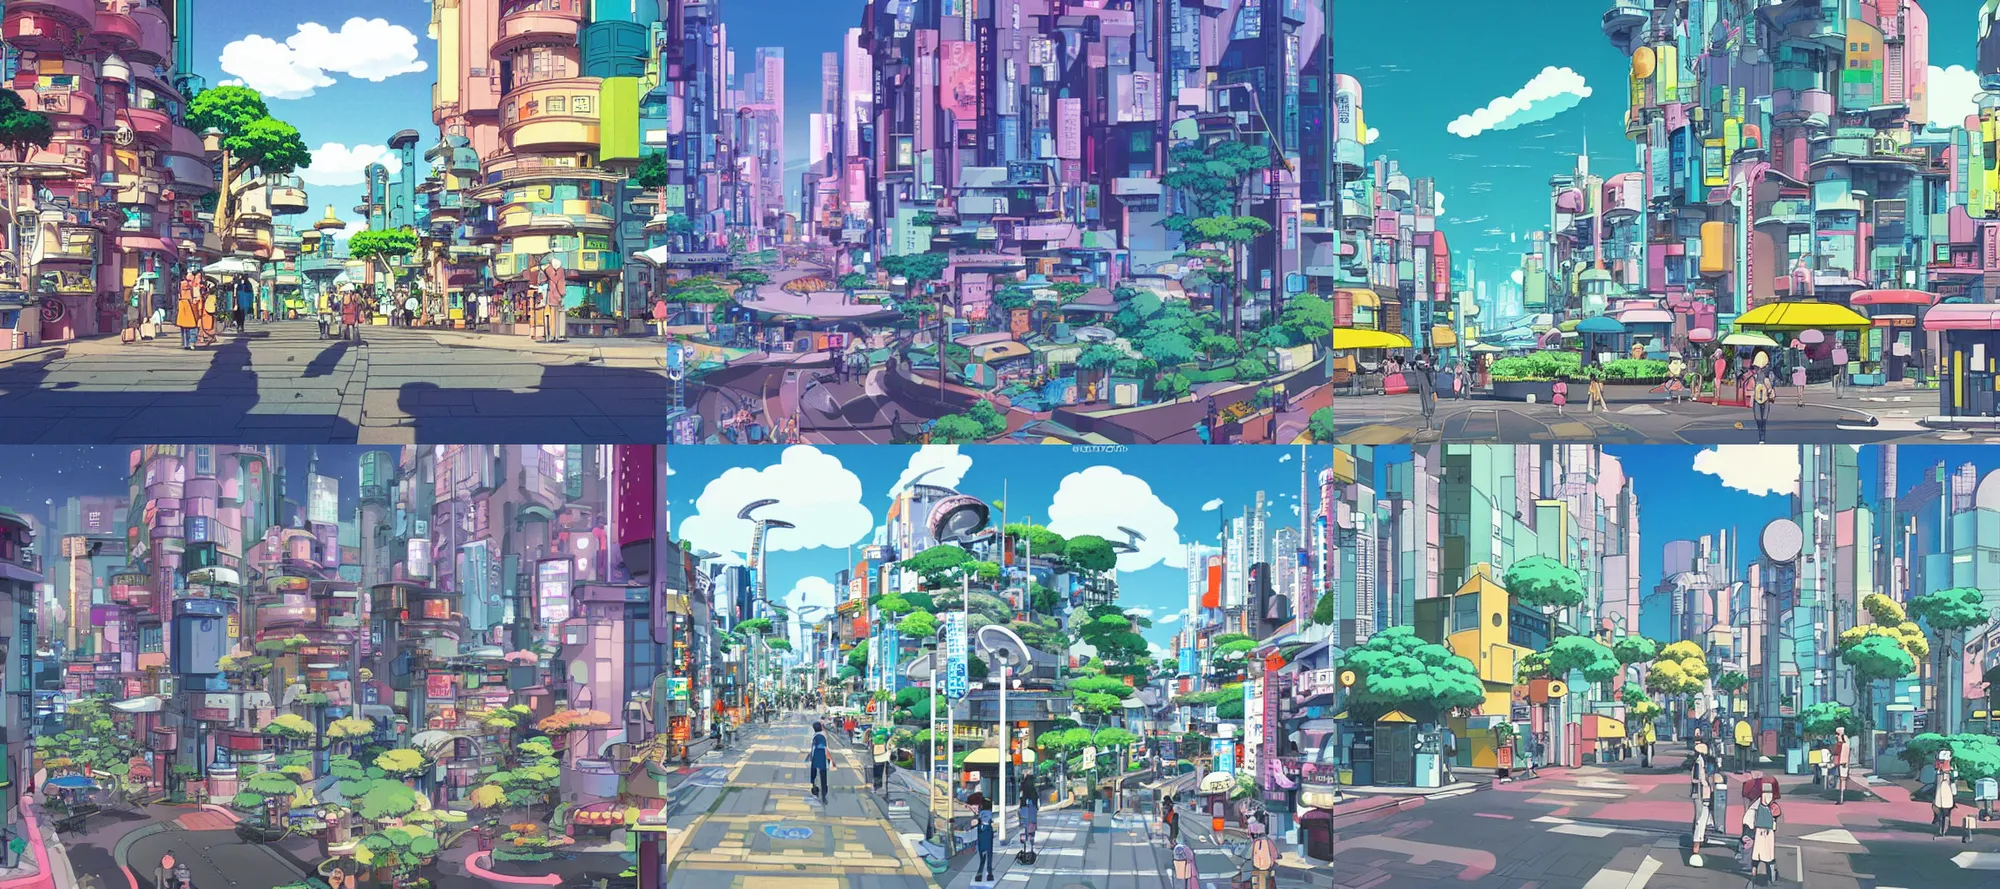 Prompt: an optimistic futuristic city street with a pop motif, by Studio ghibli